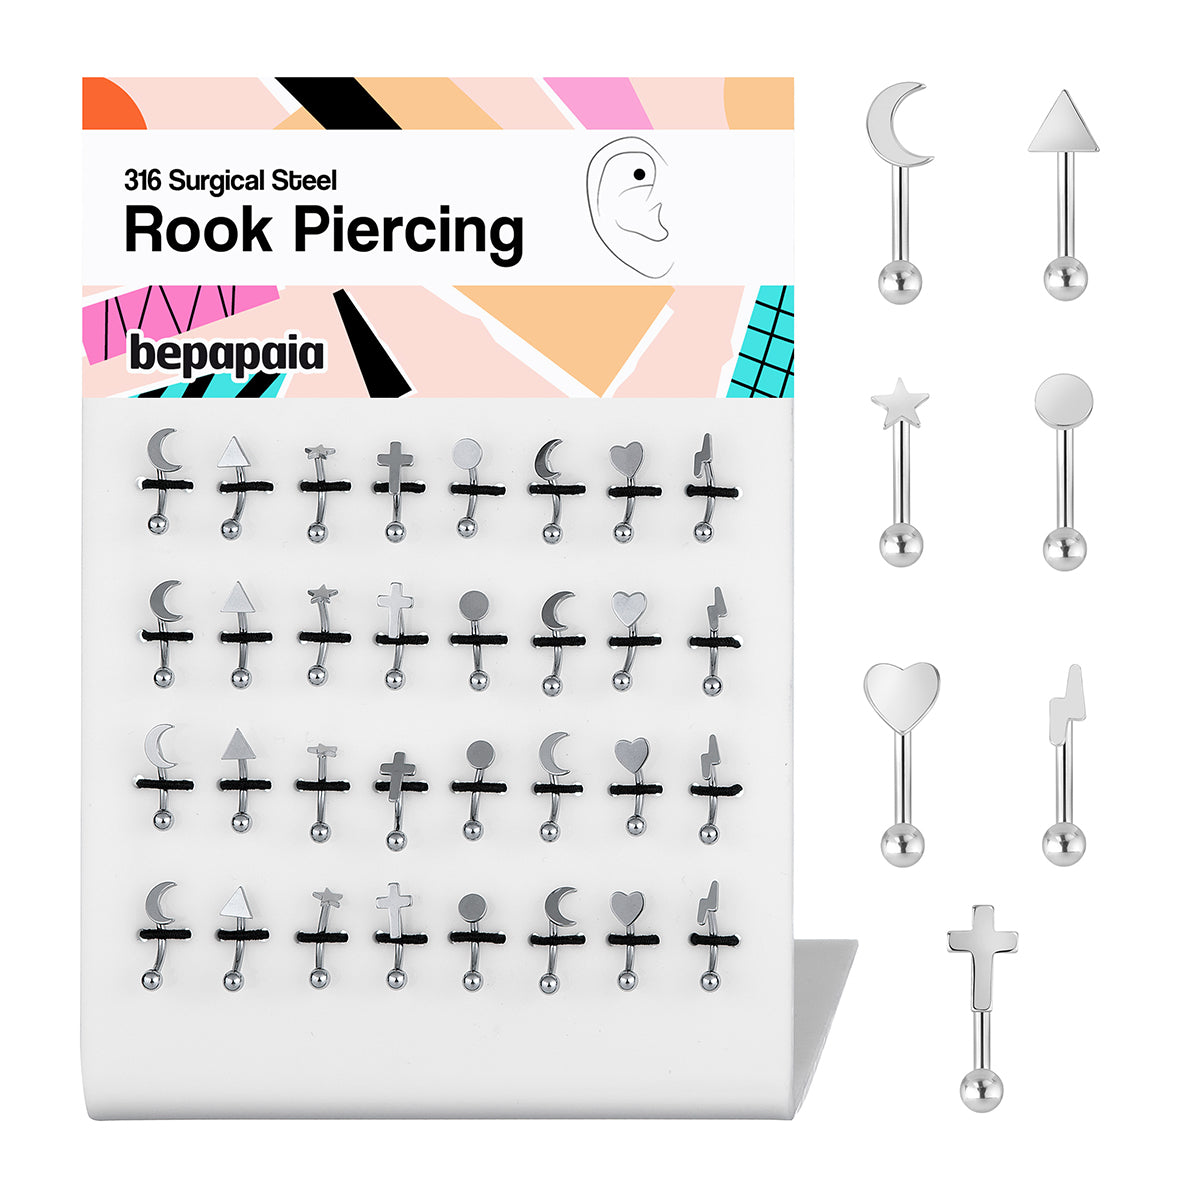 Piercing rook diseños geométricos variados